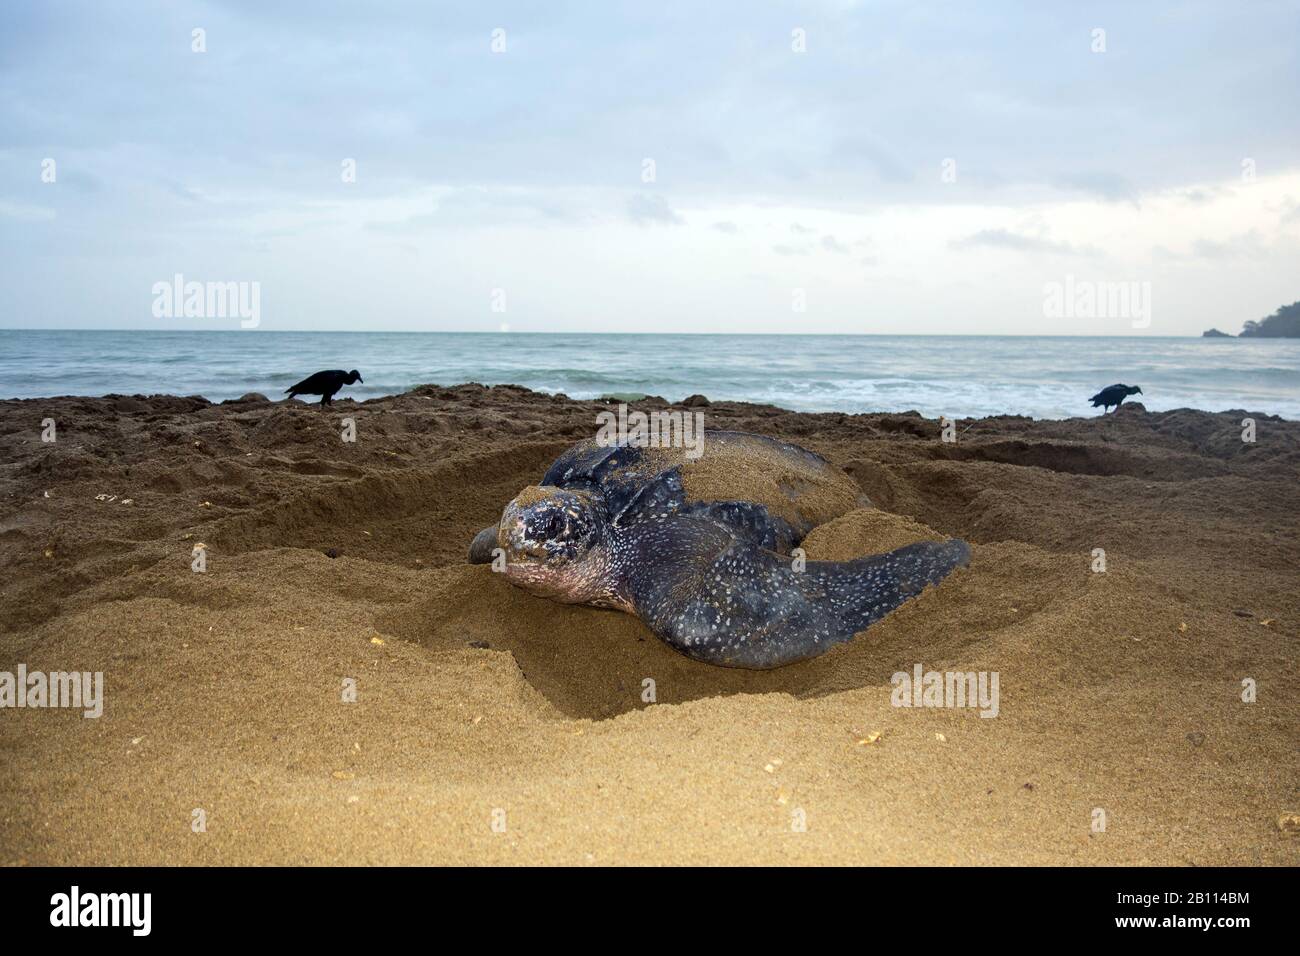 Tartaruga marina leatherback, leatherback, tartaruga leathery, luth tartaruga (Dermochelys coriacea), la più grande tartaruga vivente, sulla spiaggia, Trinidad e Tobago, Trinidad Foto Stock